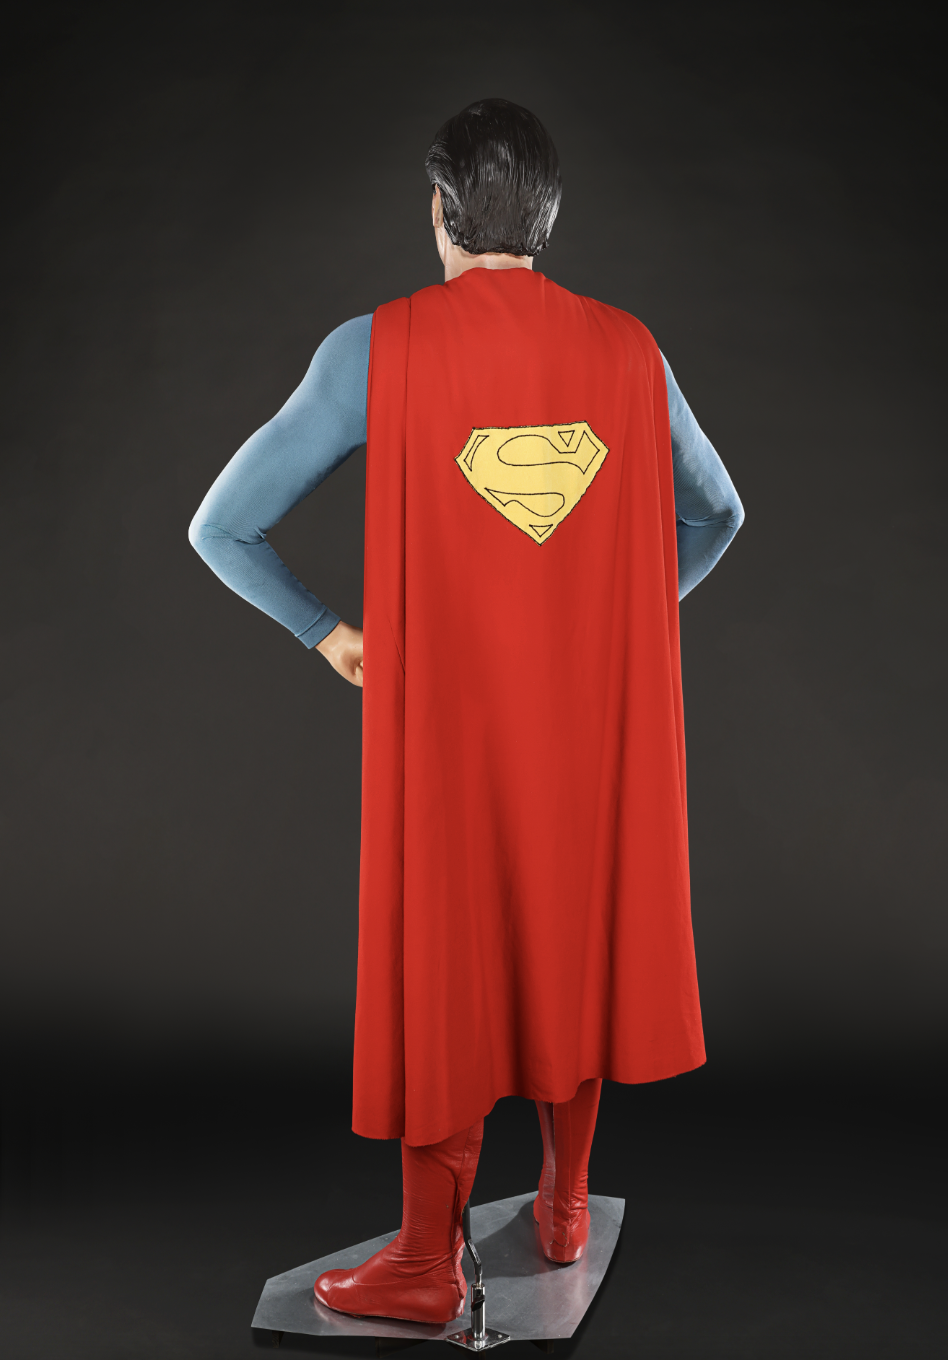 Christopher Reeve, o Super-Homem